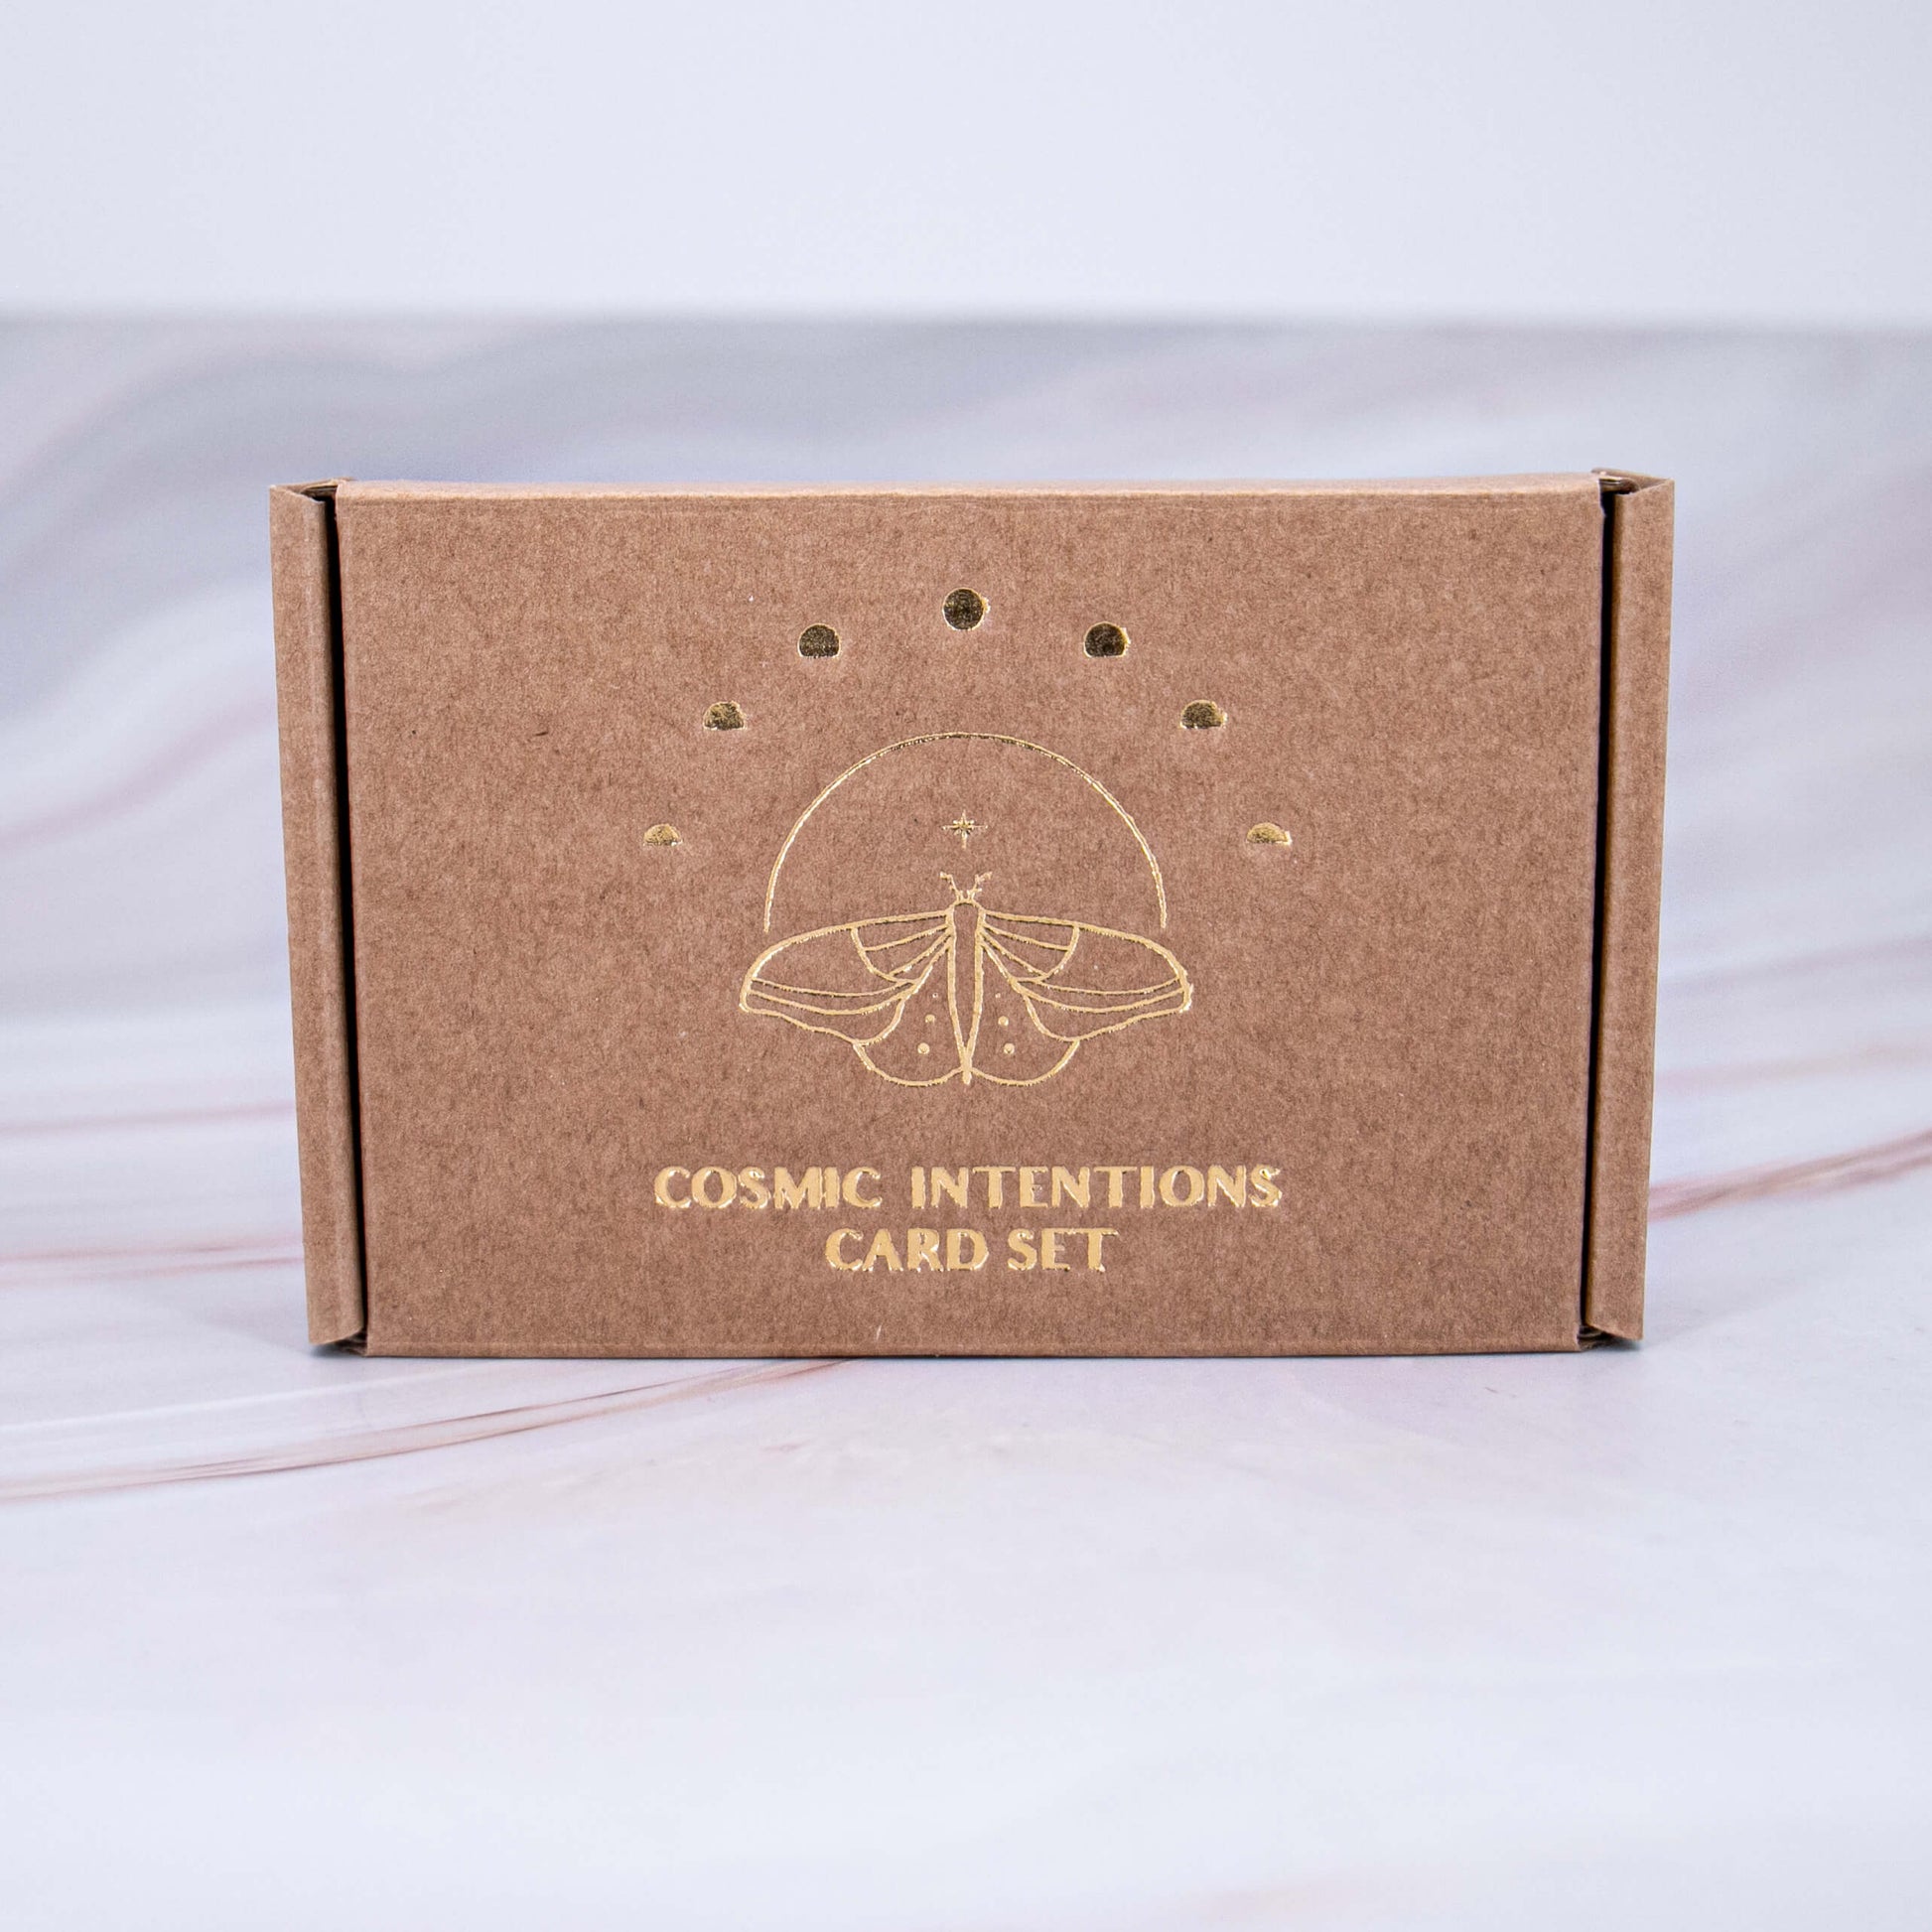 Cosmic Intentions Card Set Annurah deutscher Onlineshop Motte Schmetterling Pappe selbstgemacht Small Business 